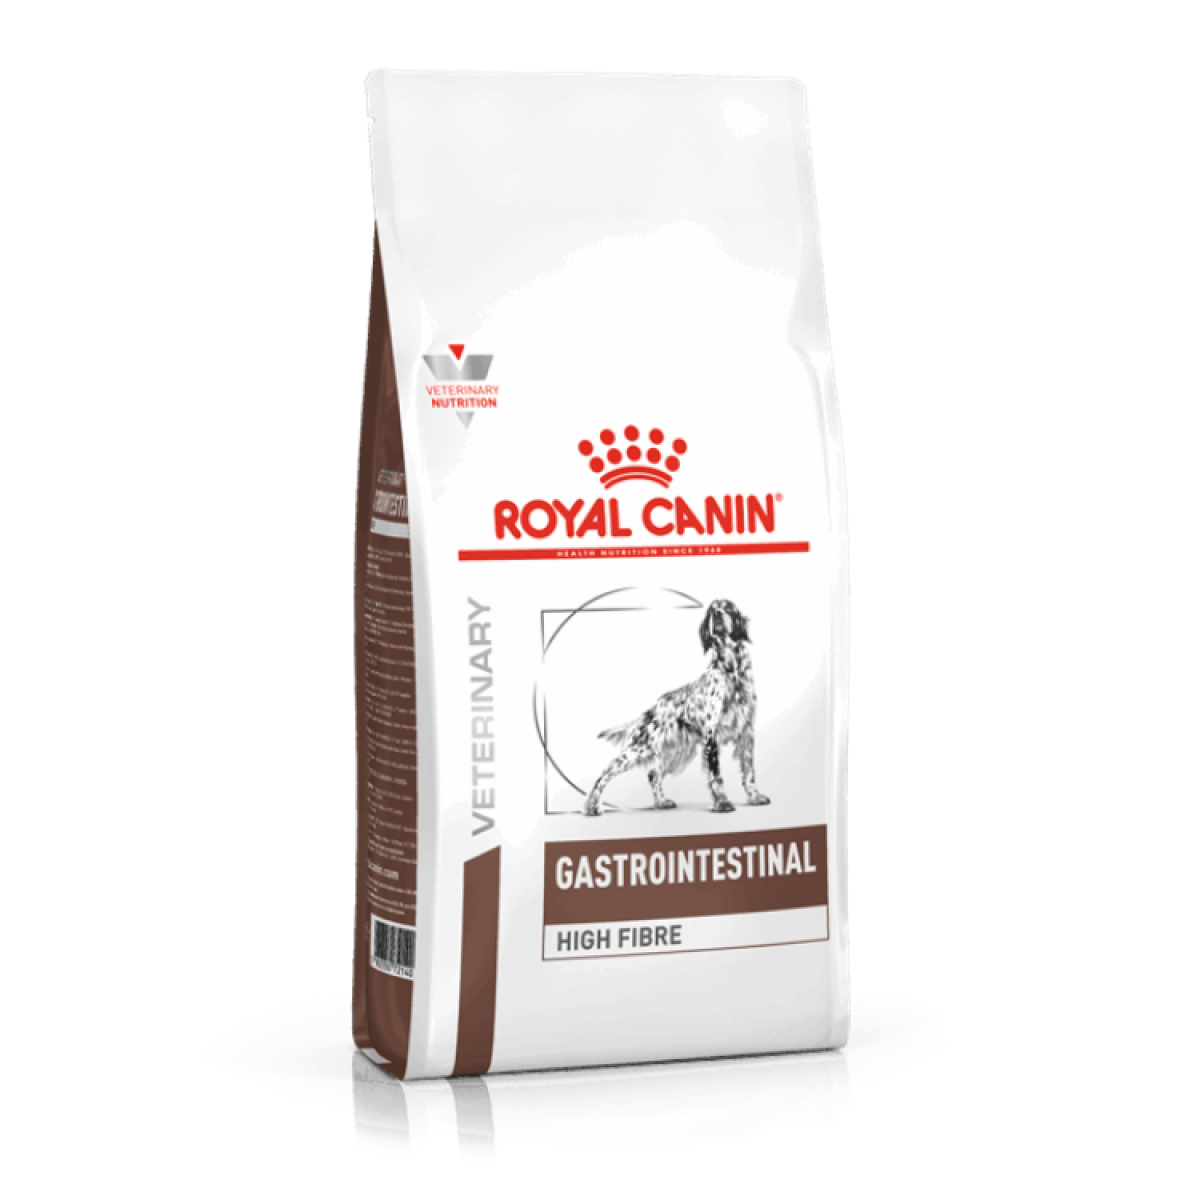 Royal Canin Gastro Intestinal Fibre Response Dog, 7.5 kg